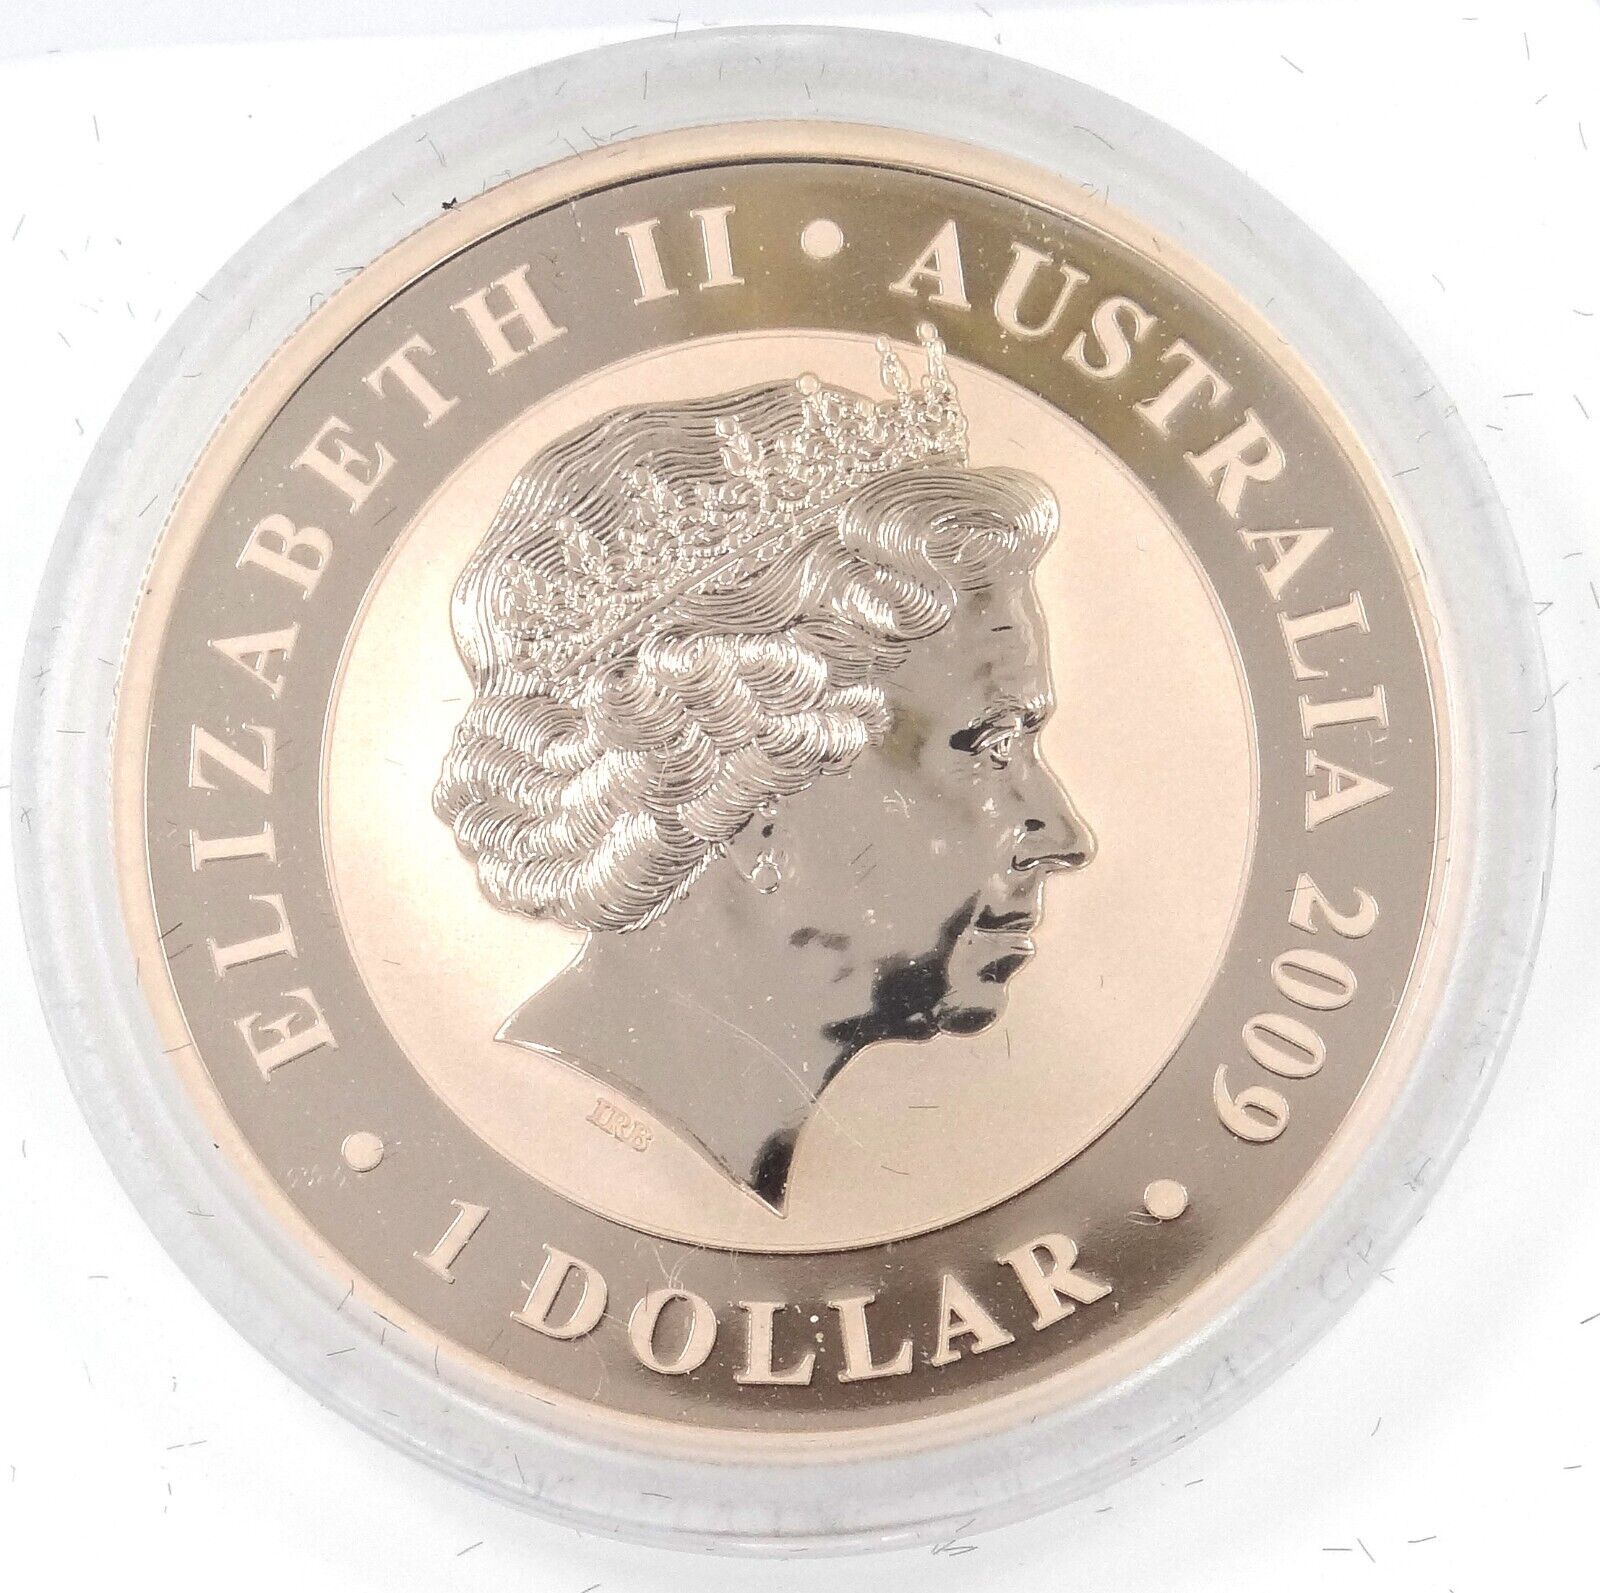 1 Oz Silver Coin 2009 Australia $1 Koala Hologram in Capsule and Box